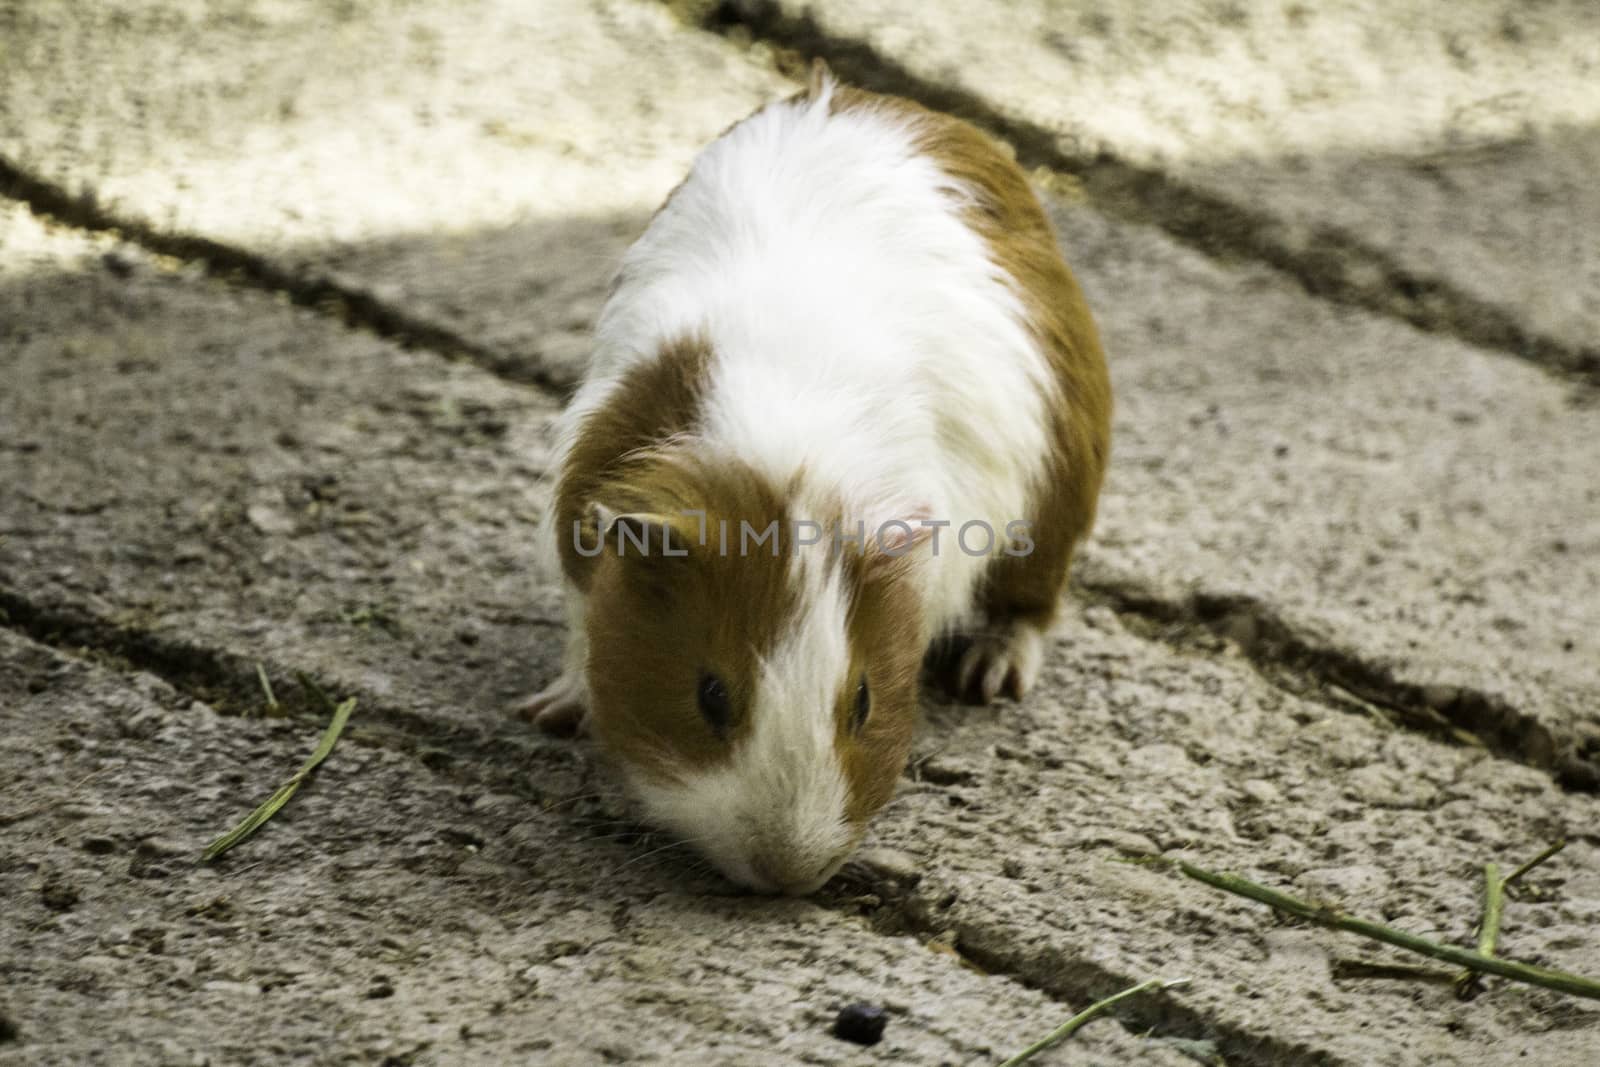 Guinea pig by StefanoAngeloni